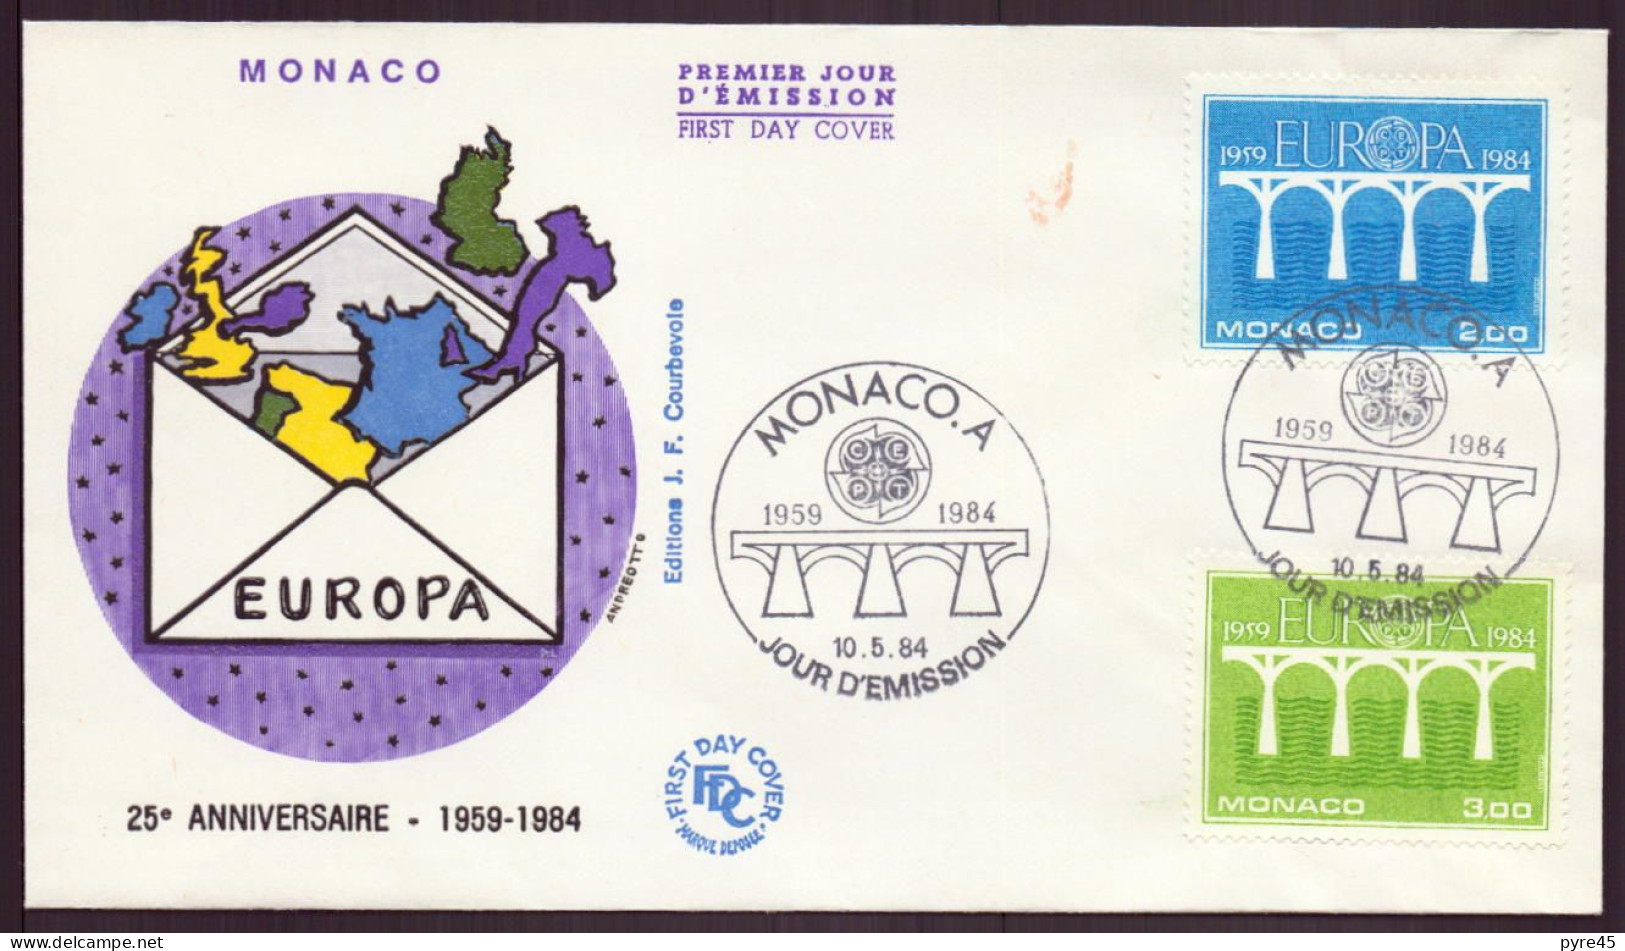 Monaco, FDC, Enveloppe Du 10 Mai 1984 à Monaco " Europa " - FDC